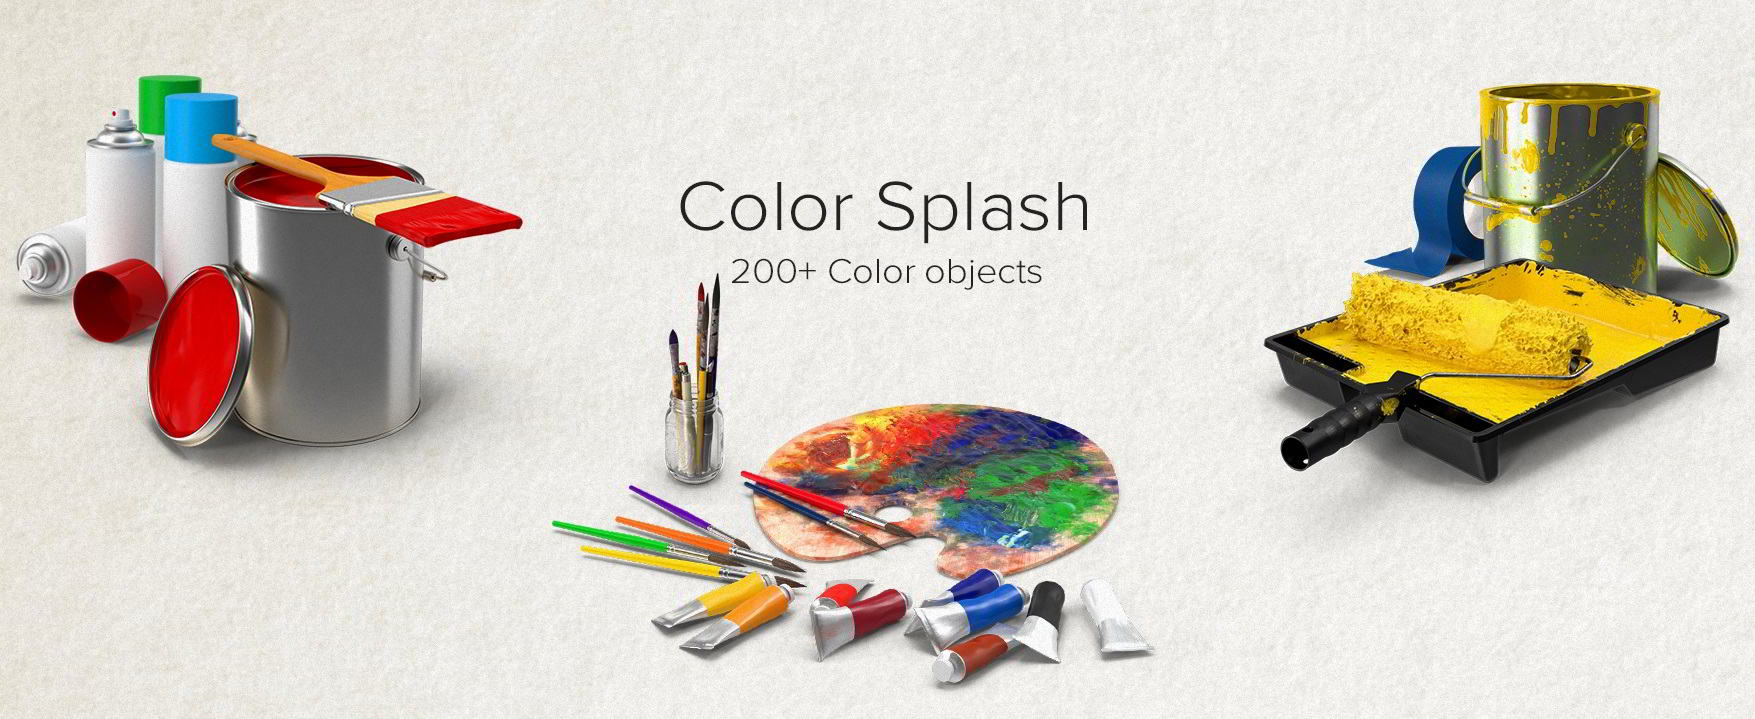 PixelSquid – Color Splash Collection free download